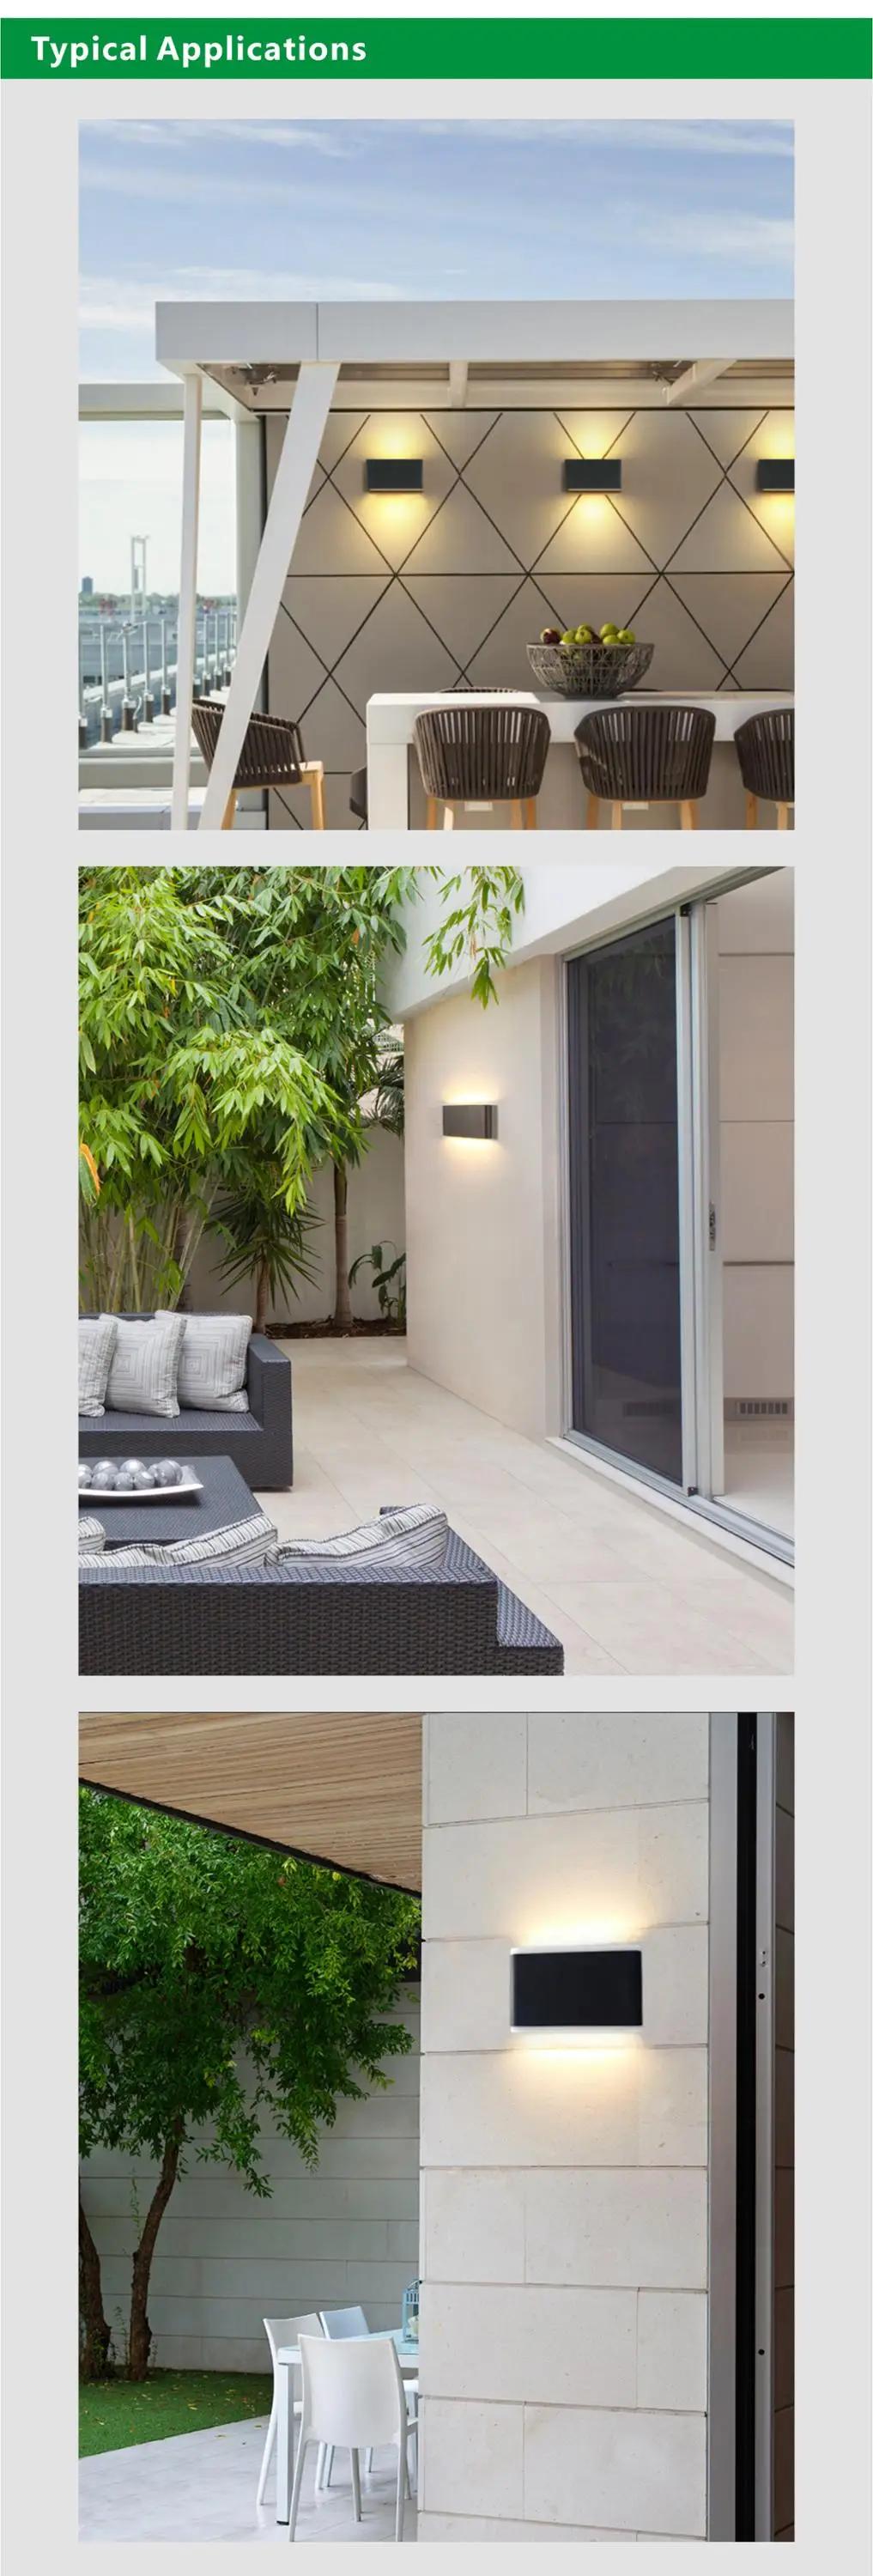 SH-802-YKL Aluminum Acrylic Simple Modern Decoration Outdoor Indoor2x5w LED Wall Lighting